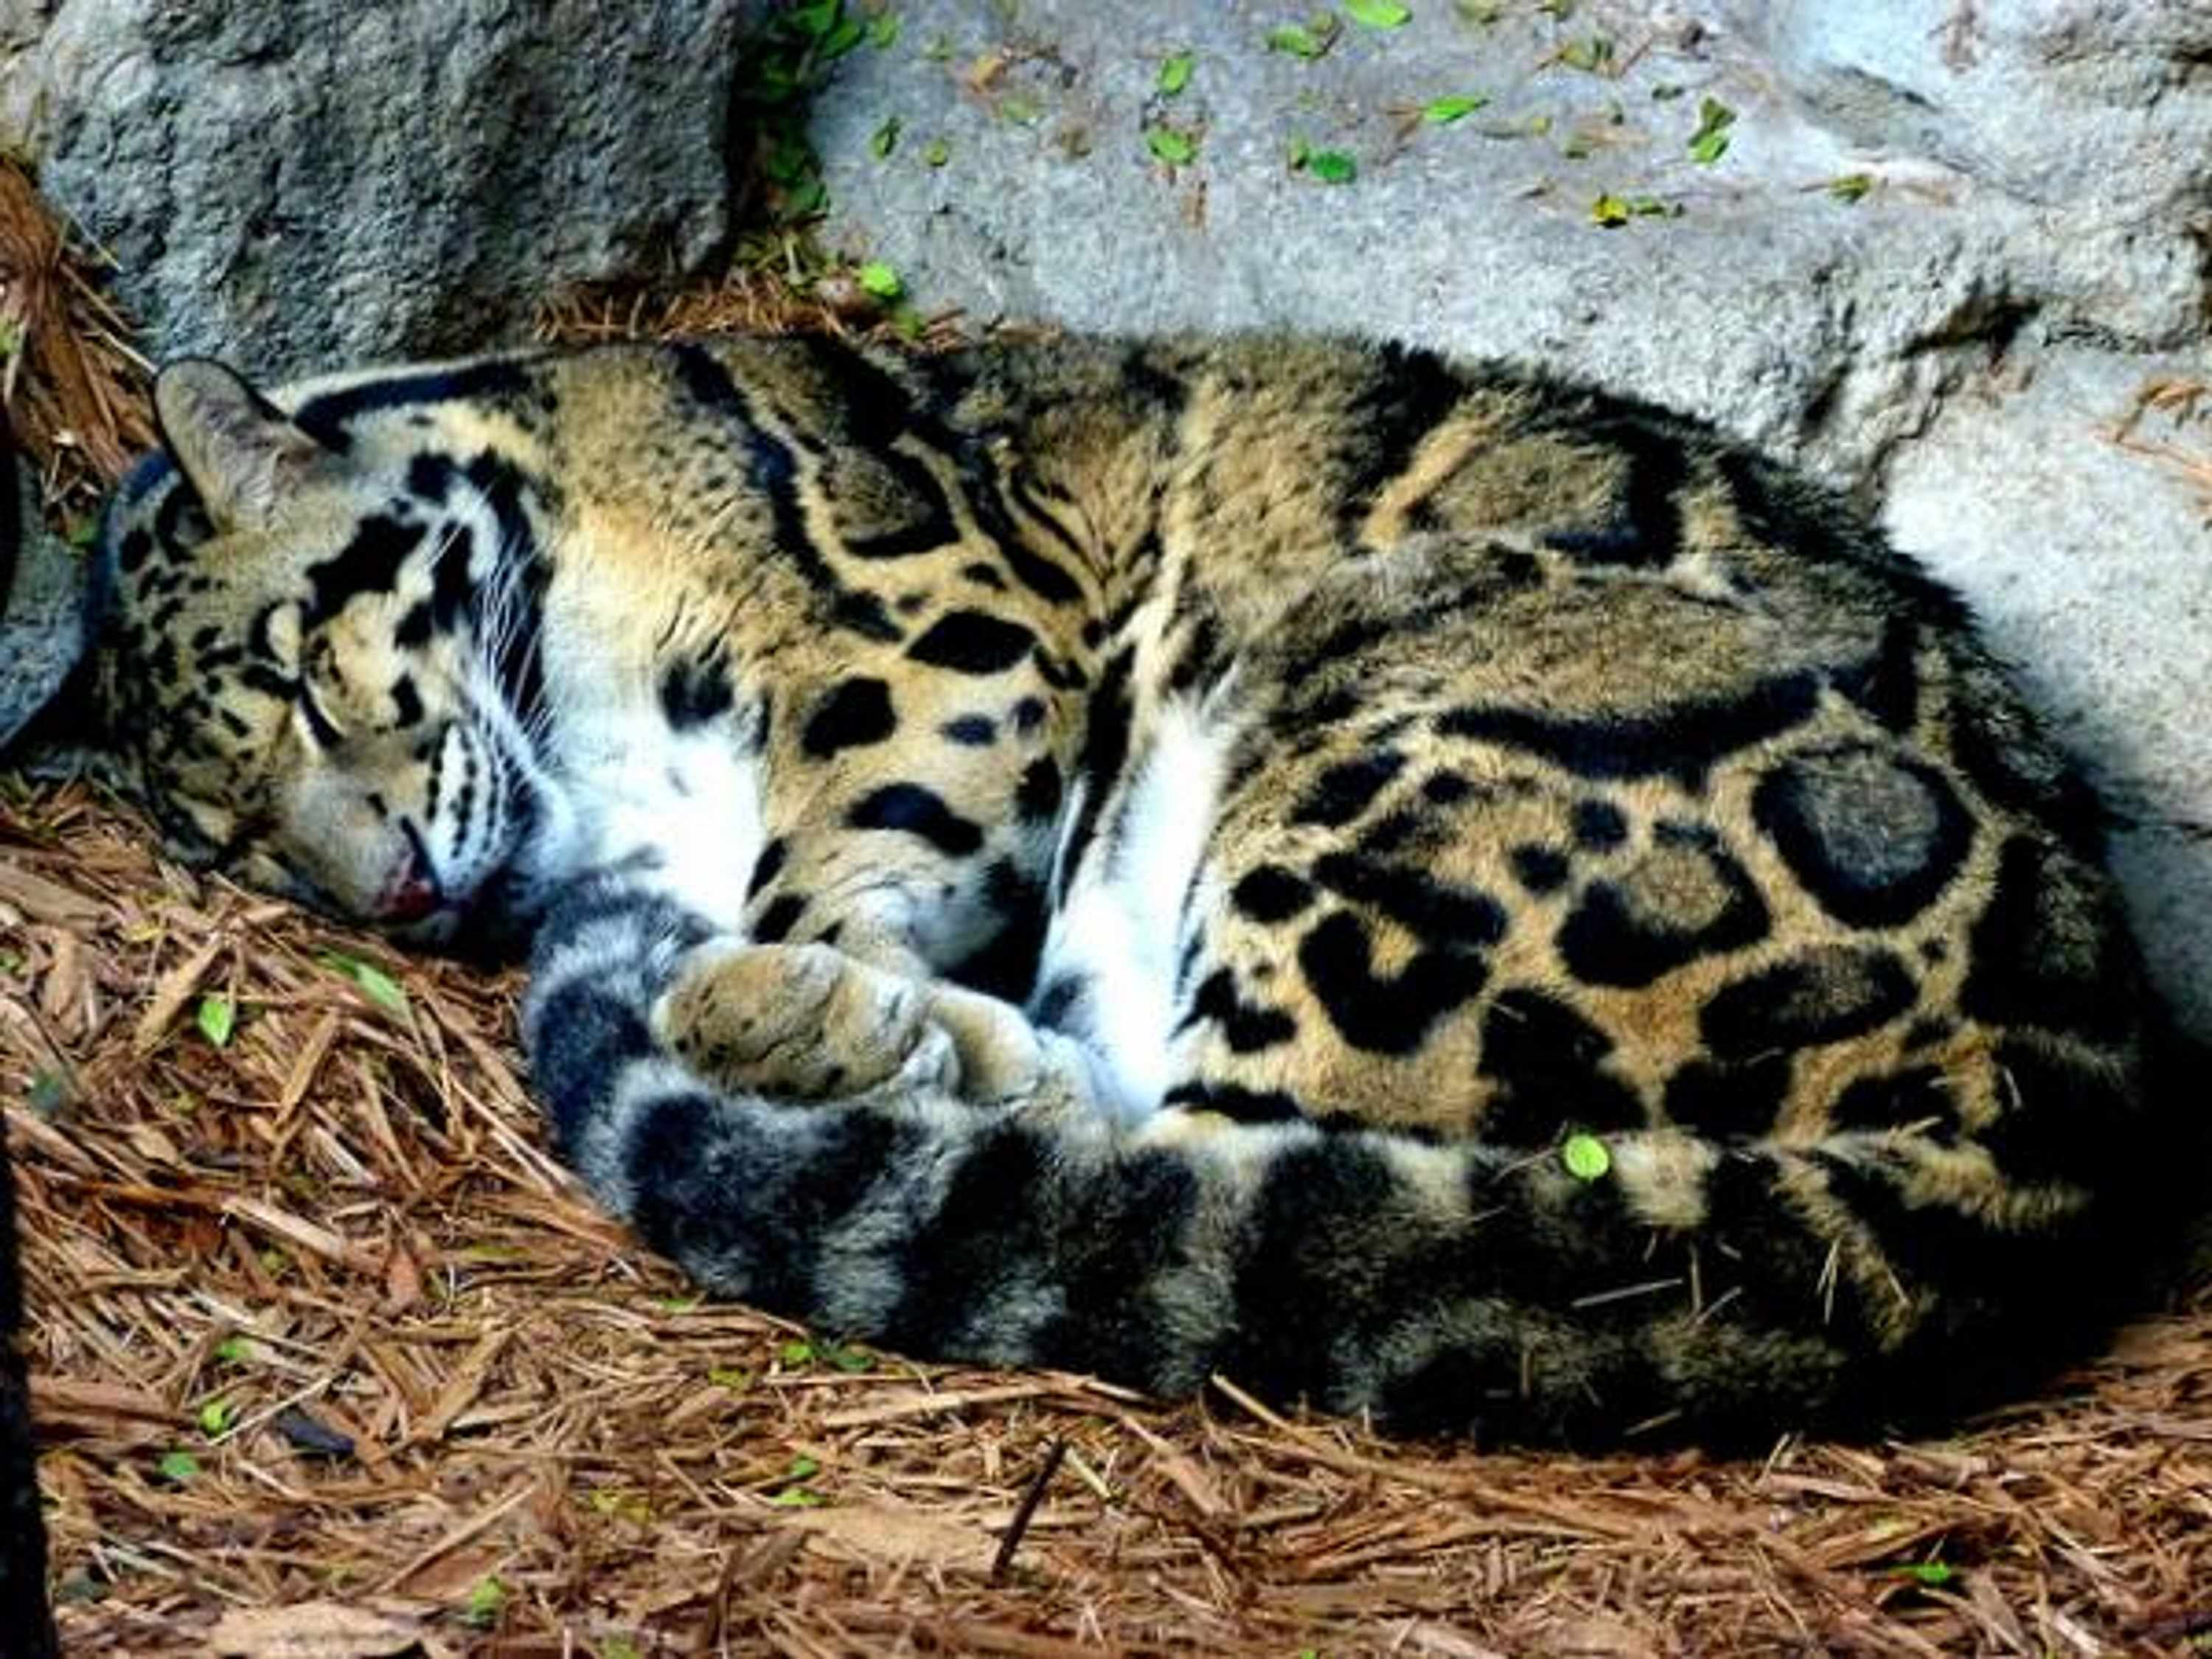 A Clouded Leopard sleeping